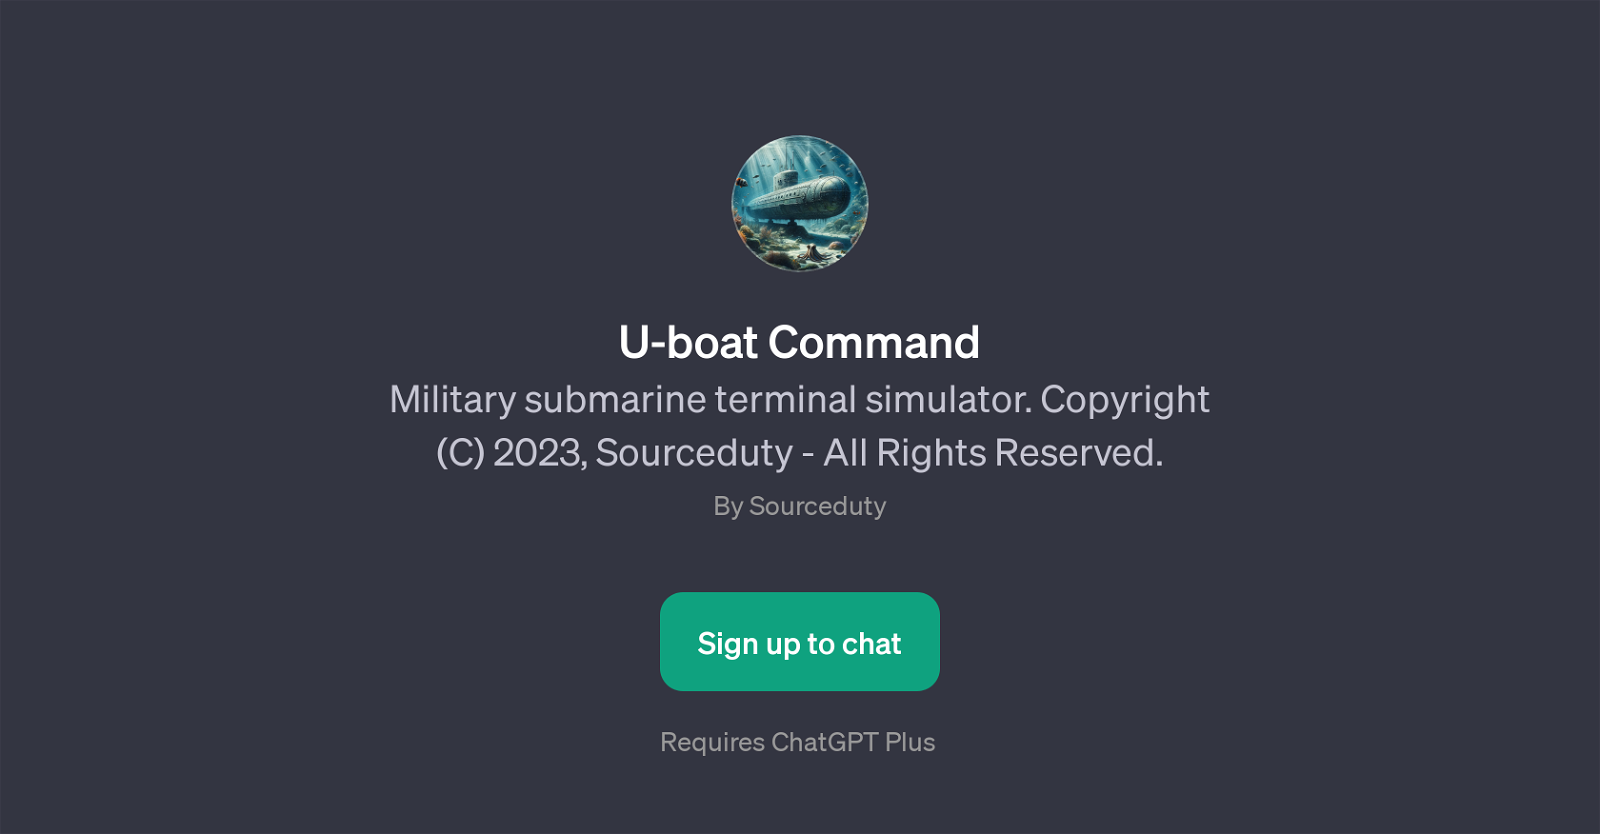 U-boat Command website